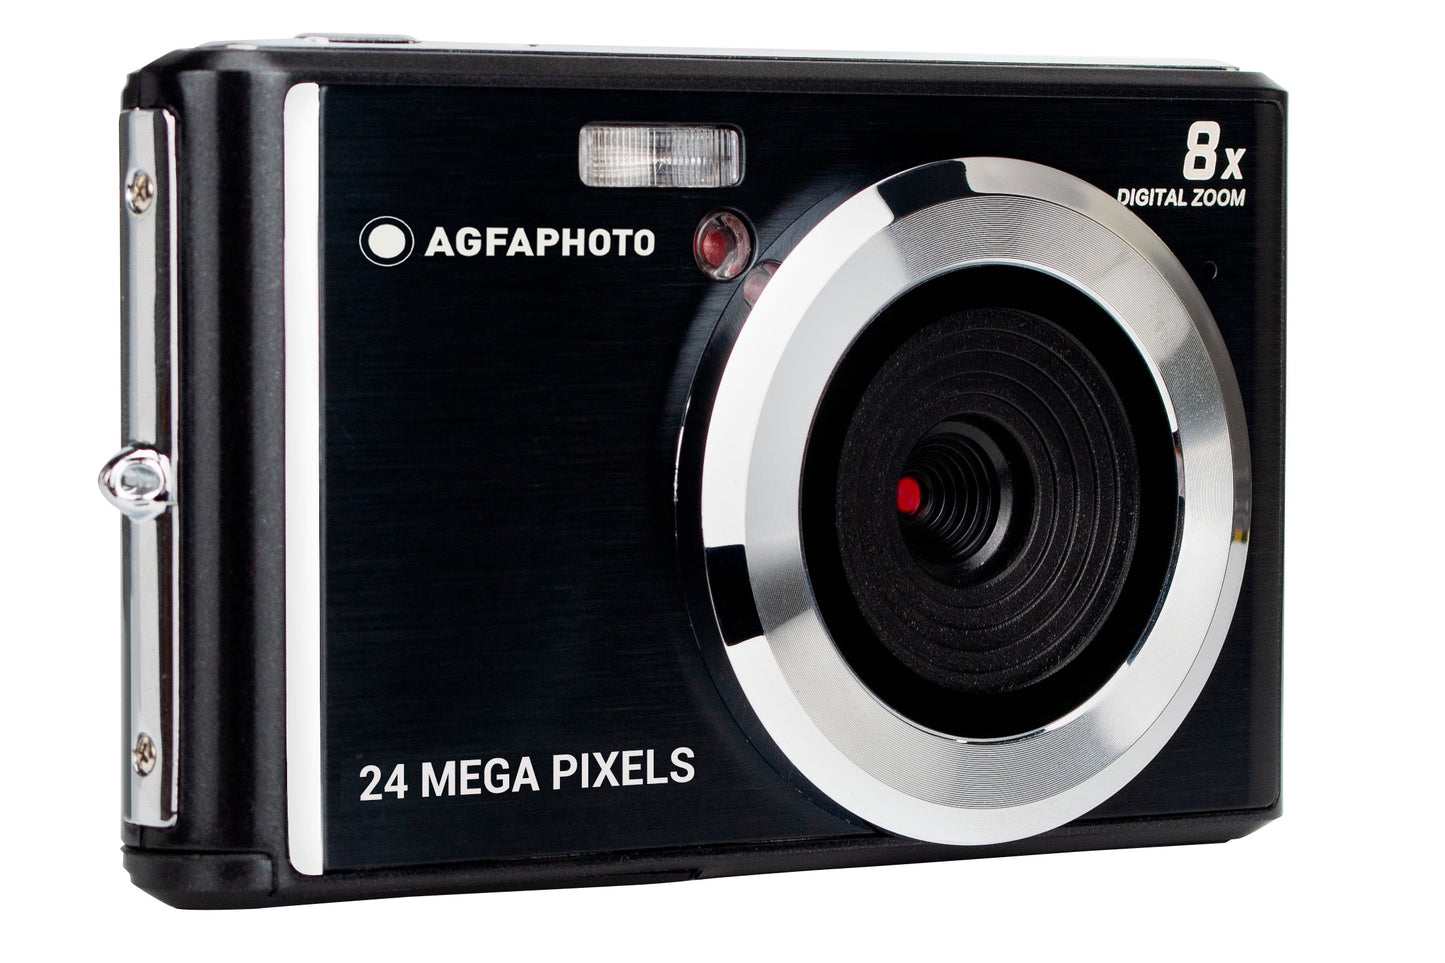 Agfa Photo Realishot DC5500 Compact Digital Camera - maplin.co.uk